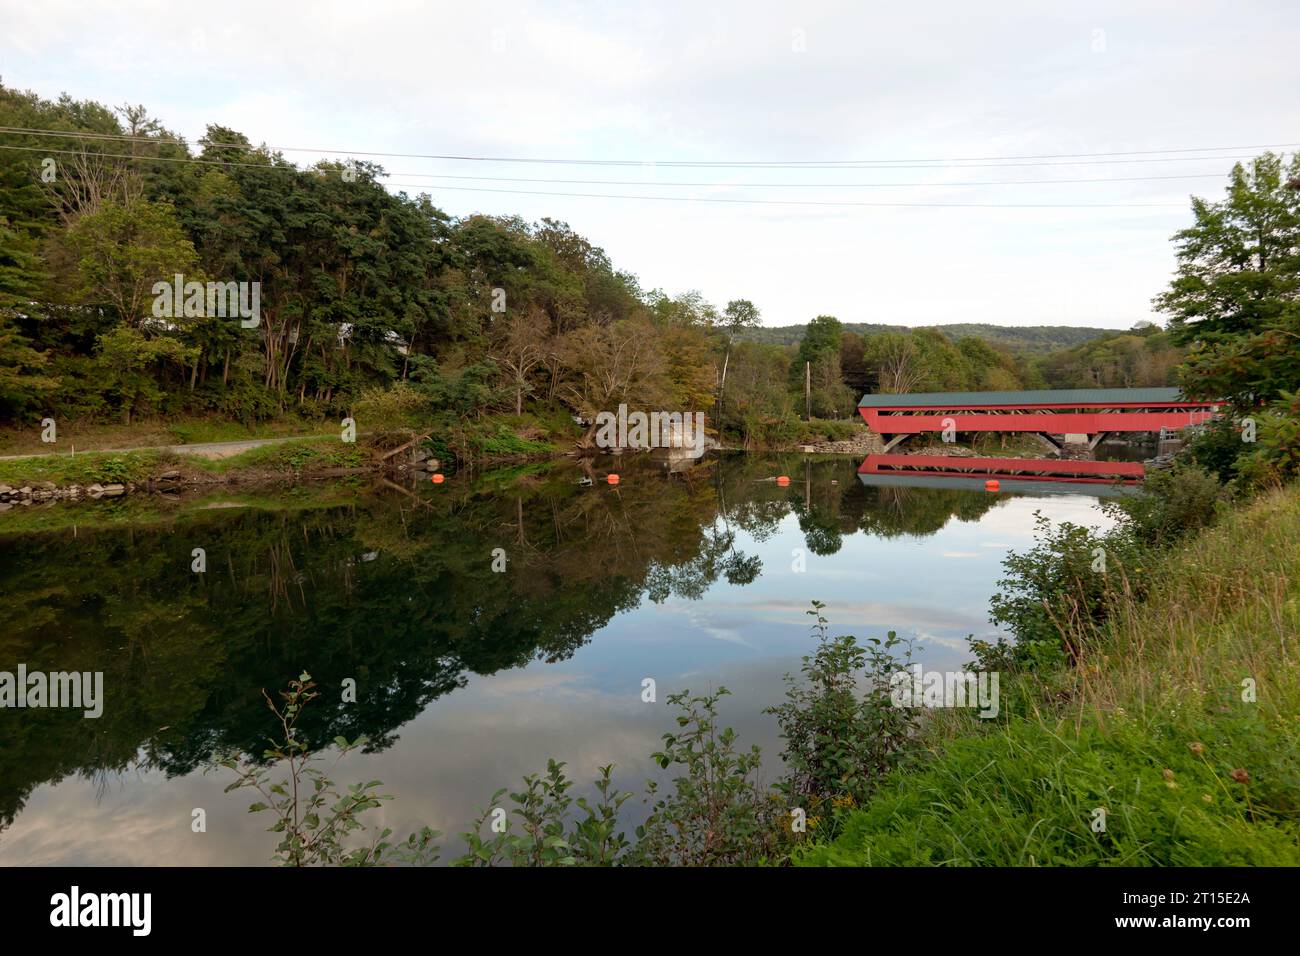 Taftsville Covered Bridge,  Taftsville village of Woodstock, Vermont, United States. Stock Photo